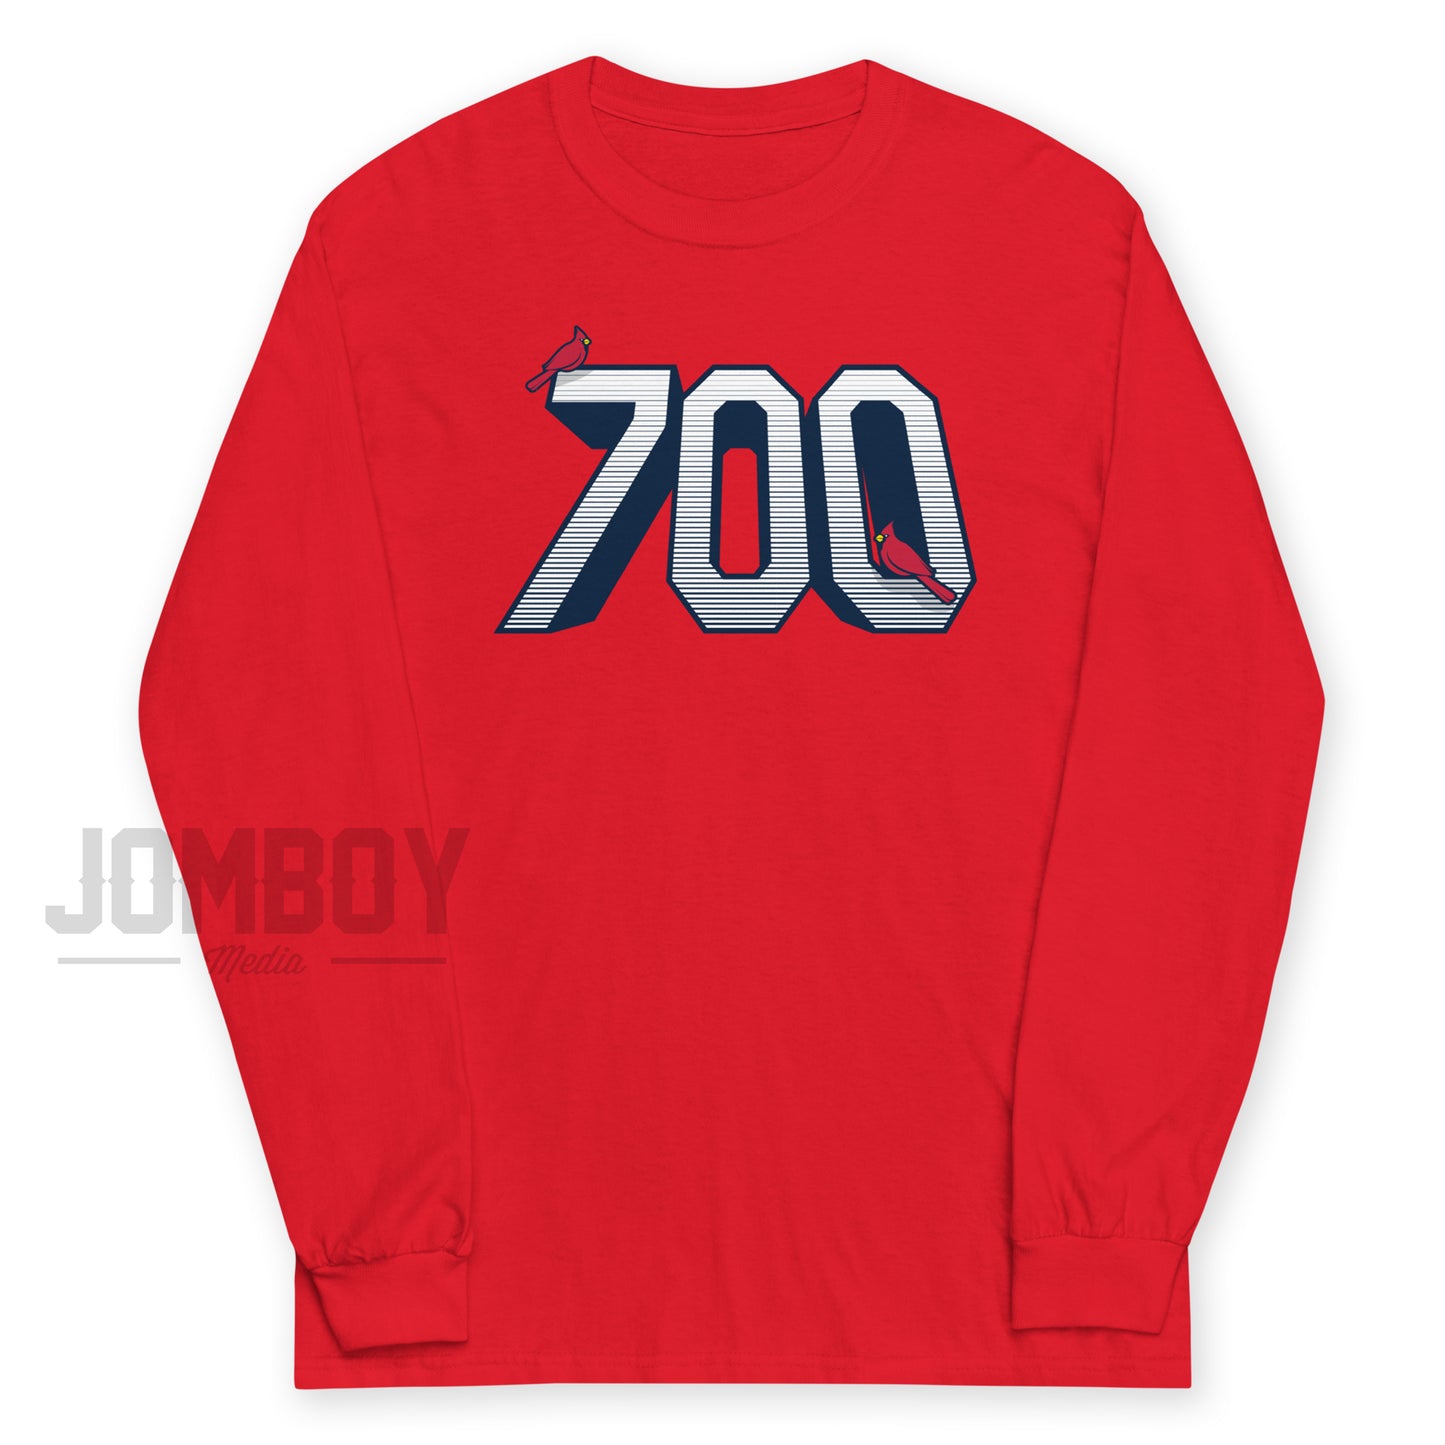 700 | Long Sleeve Shirt